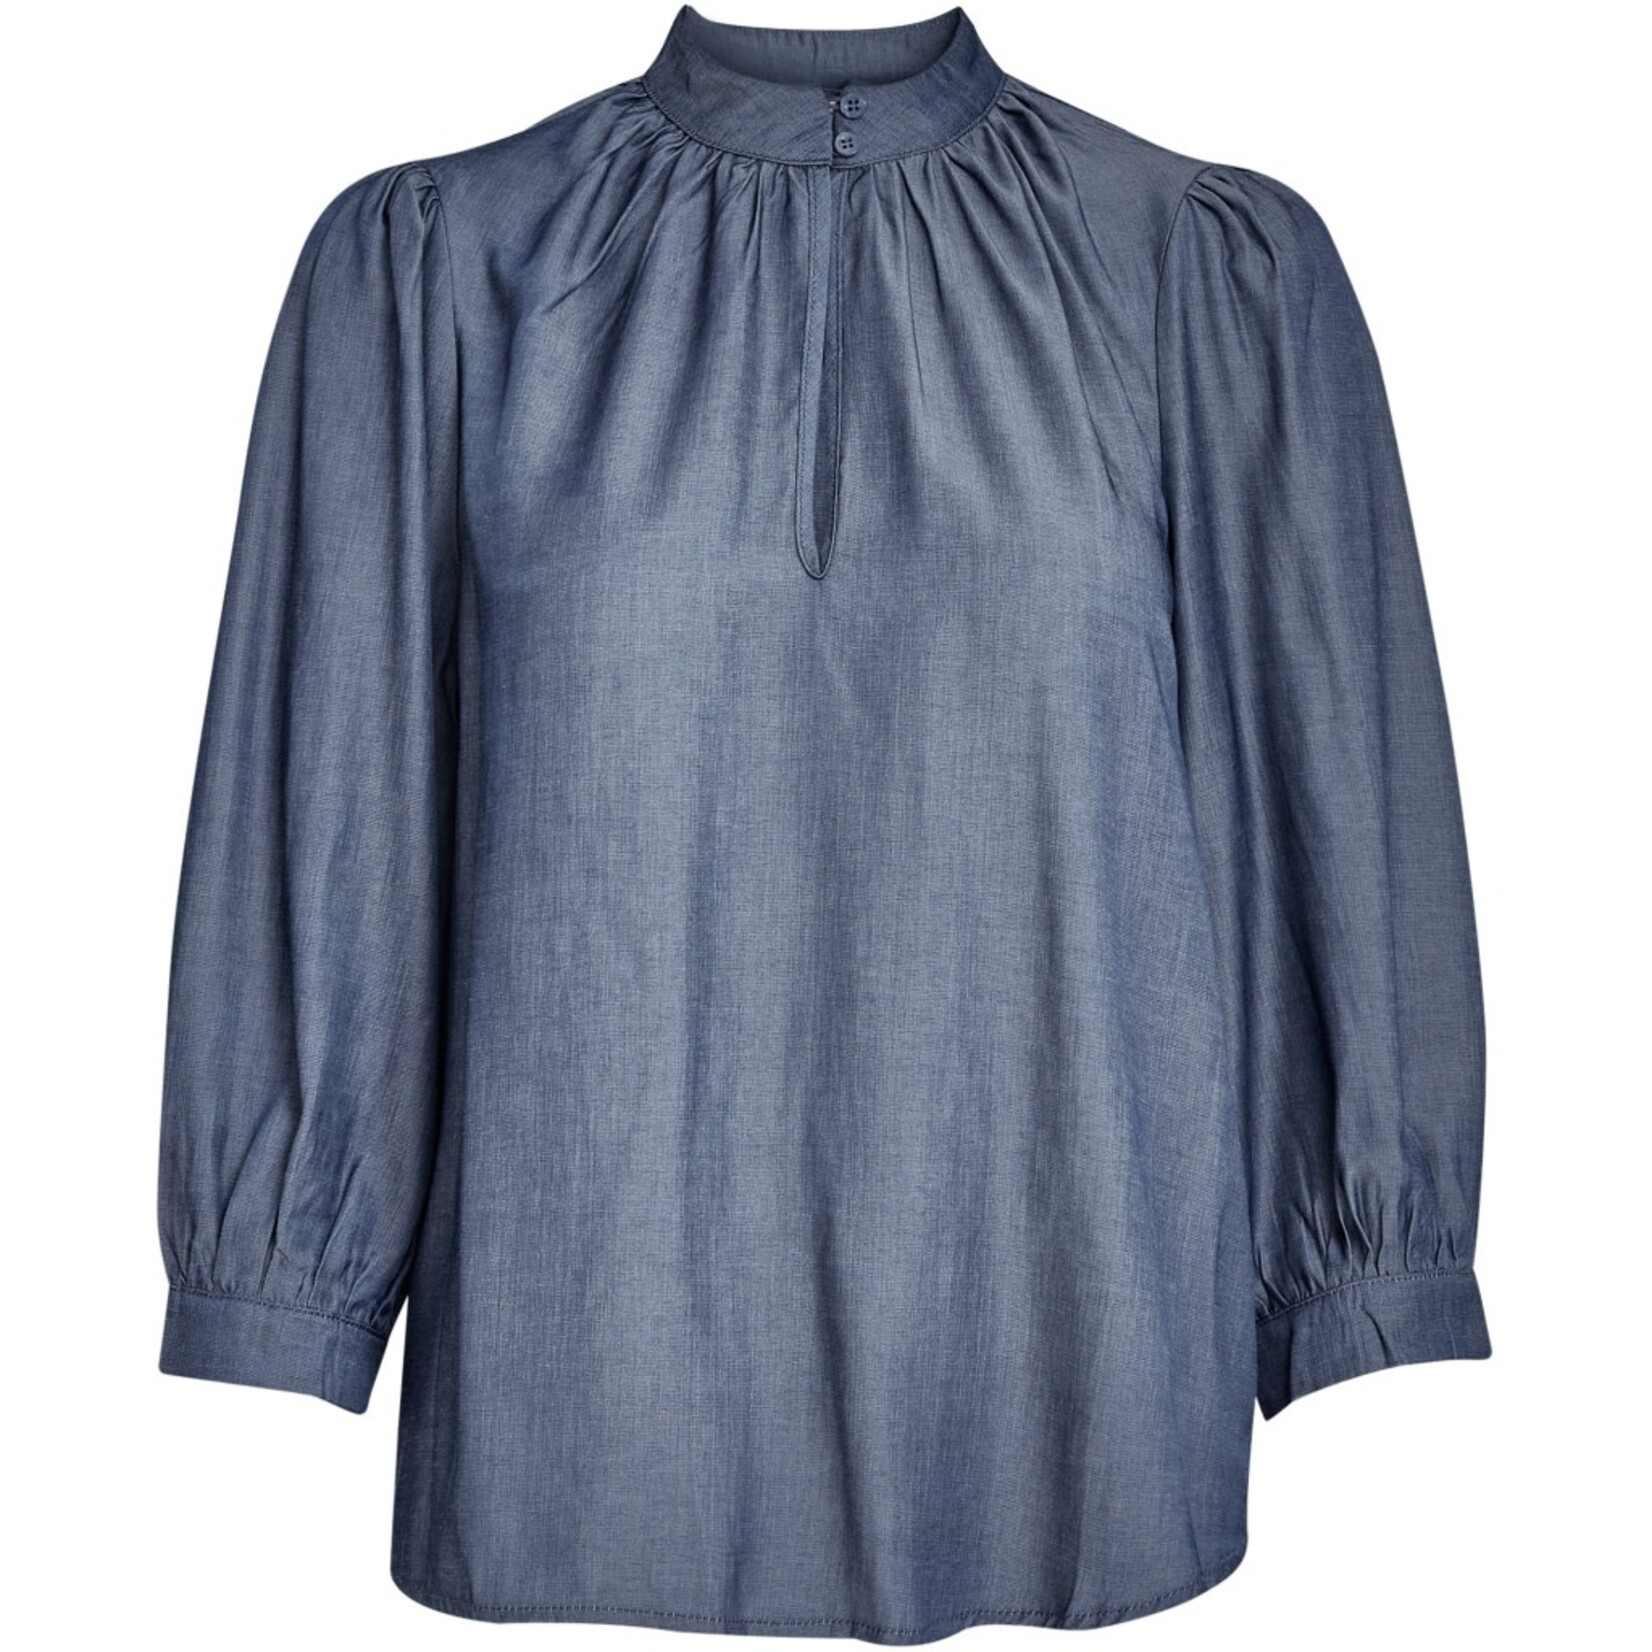 Minus Kelsy 3/4 sleeve blouse Black iris